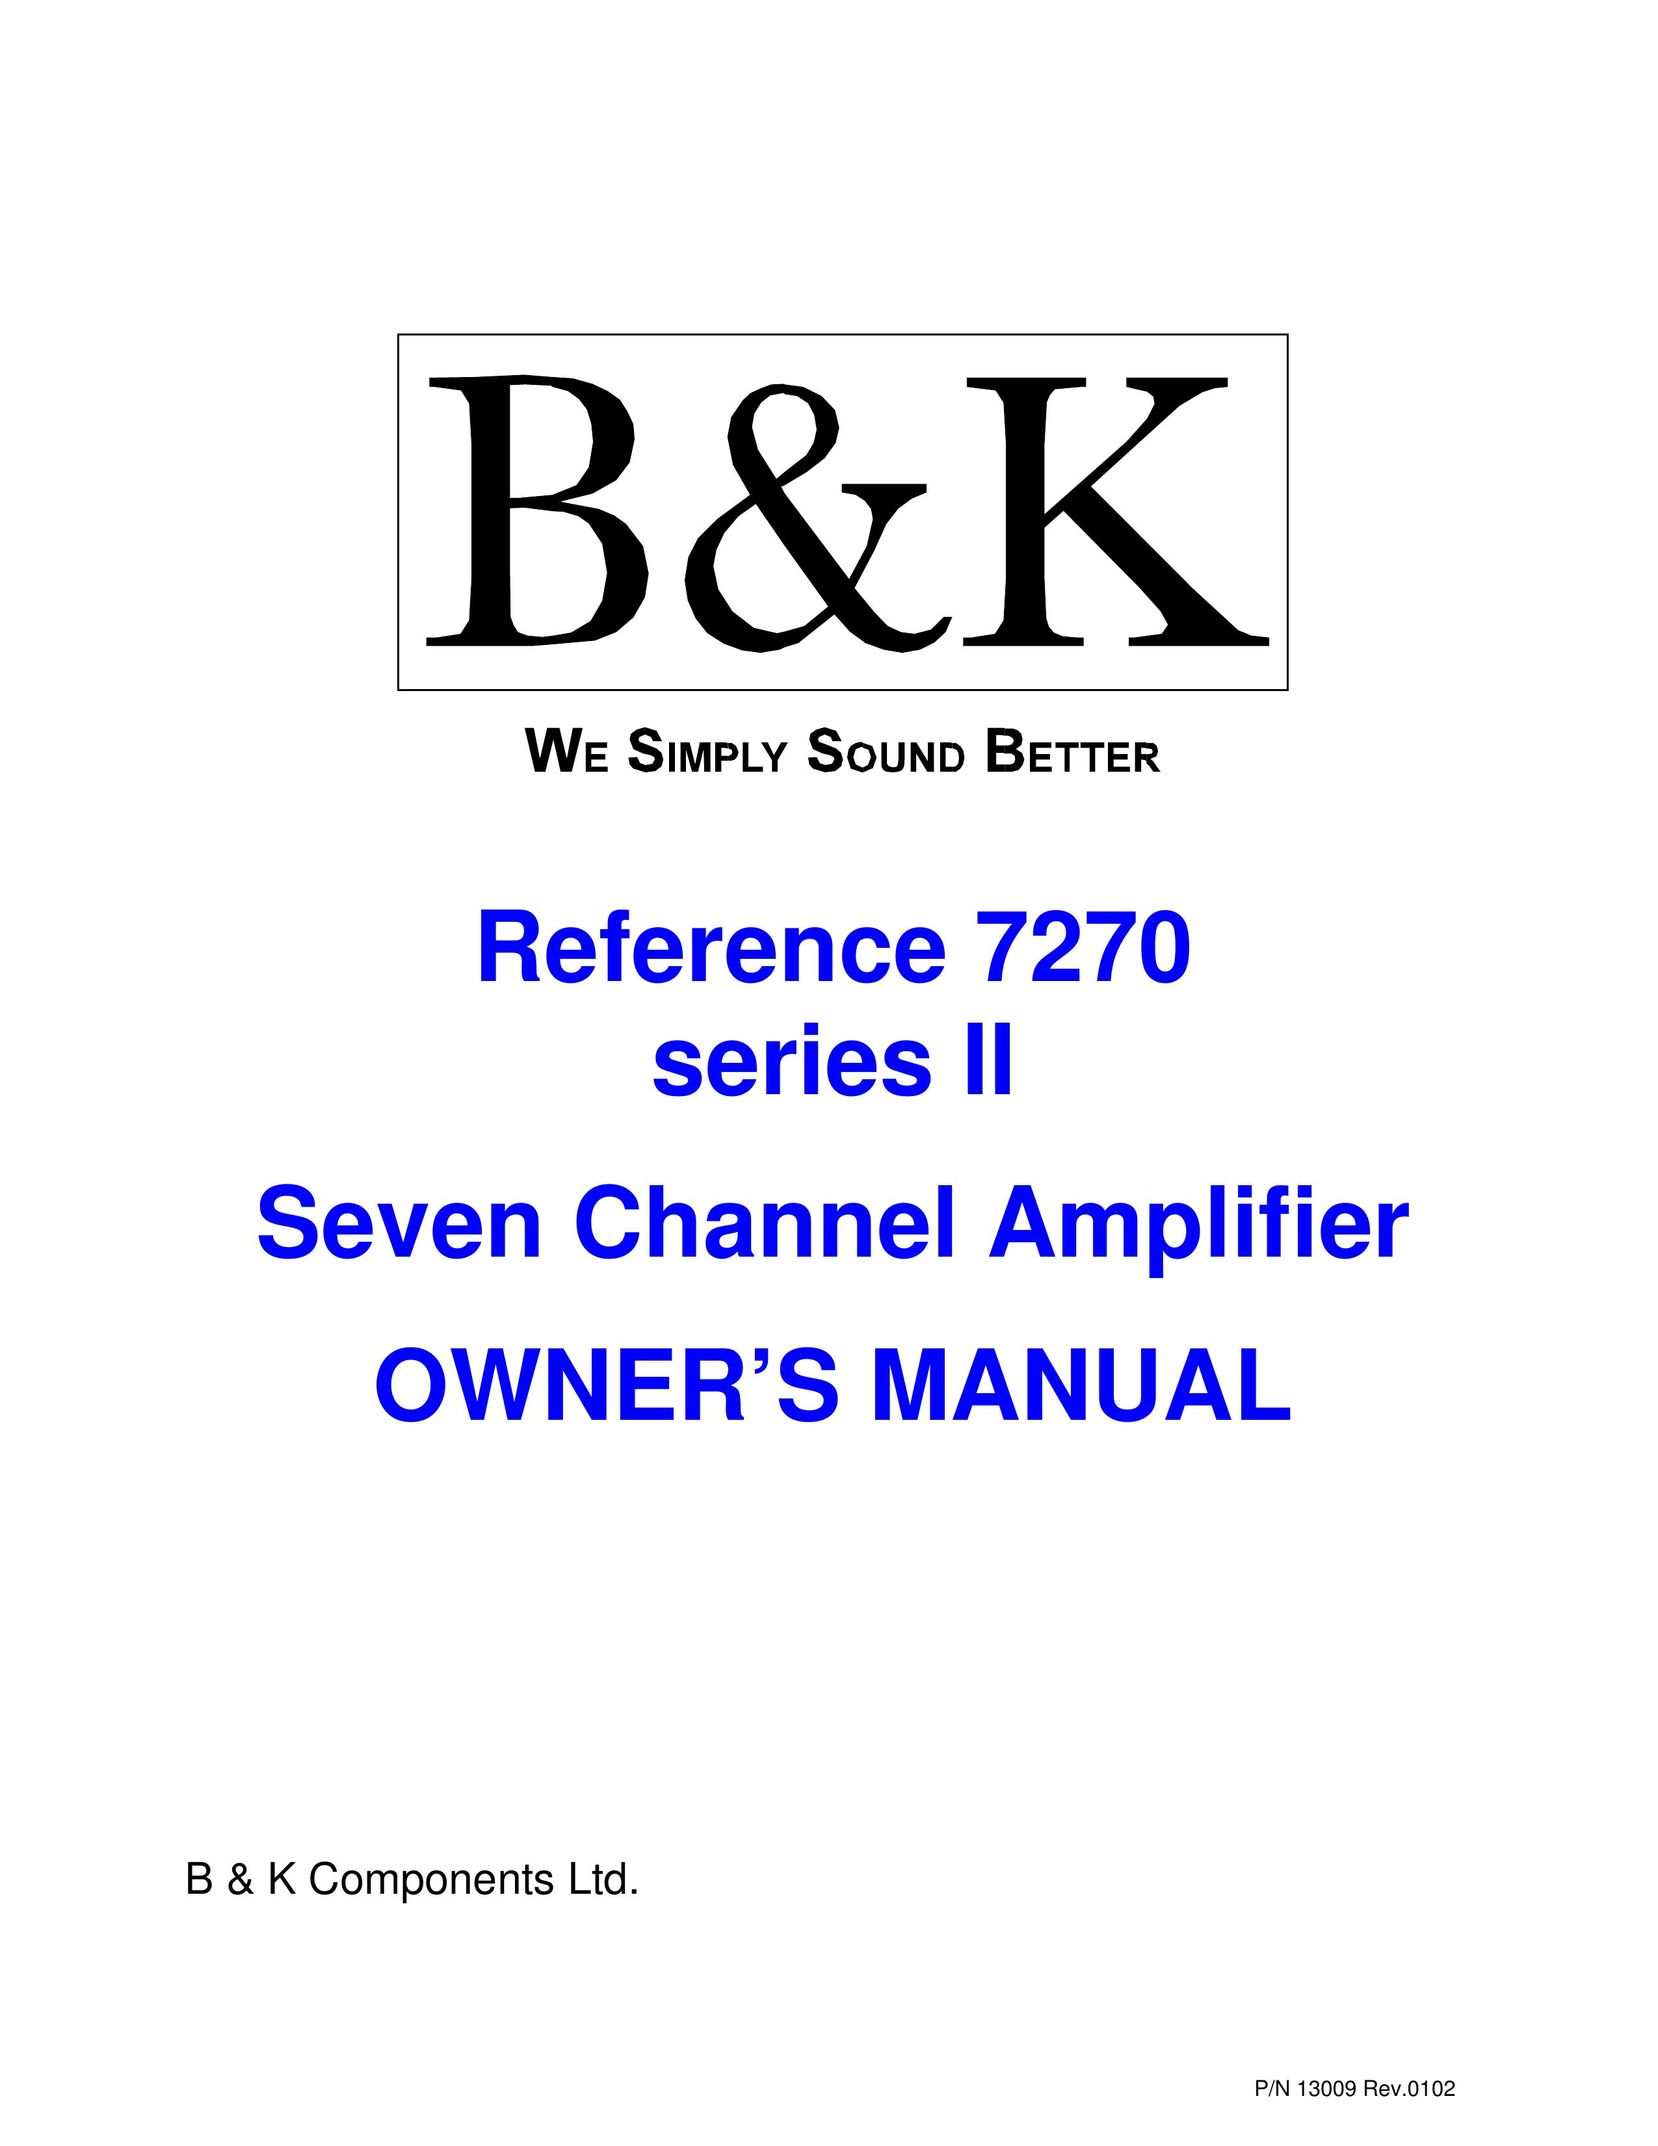 B&K series II Stereo Amplifier User Manual